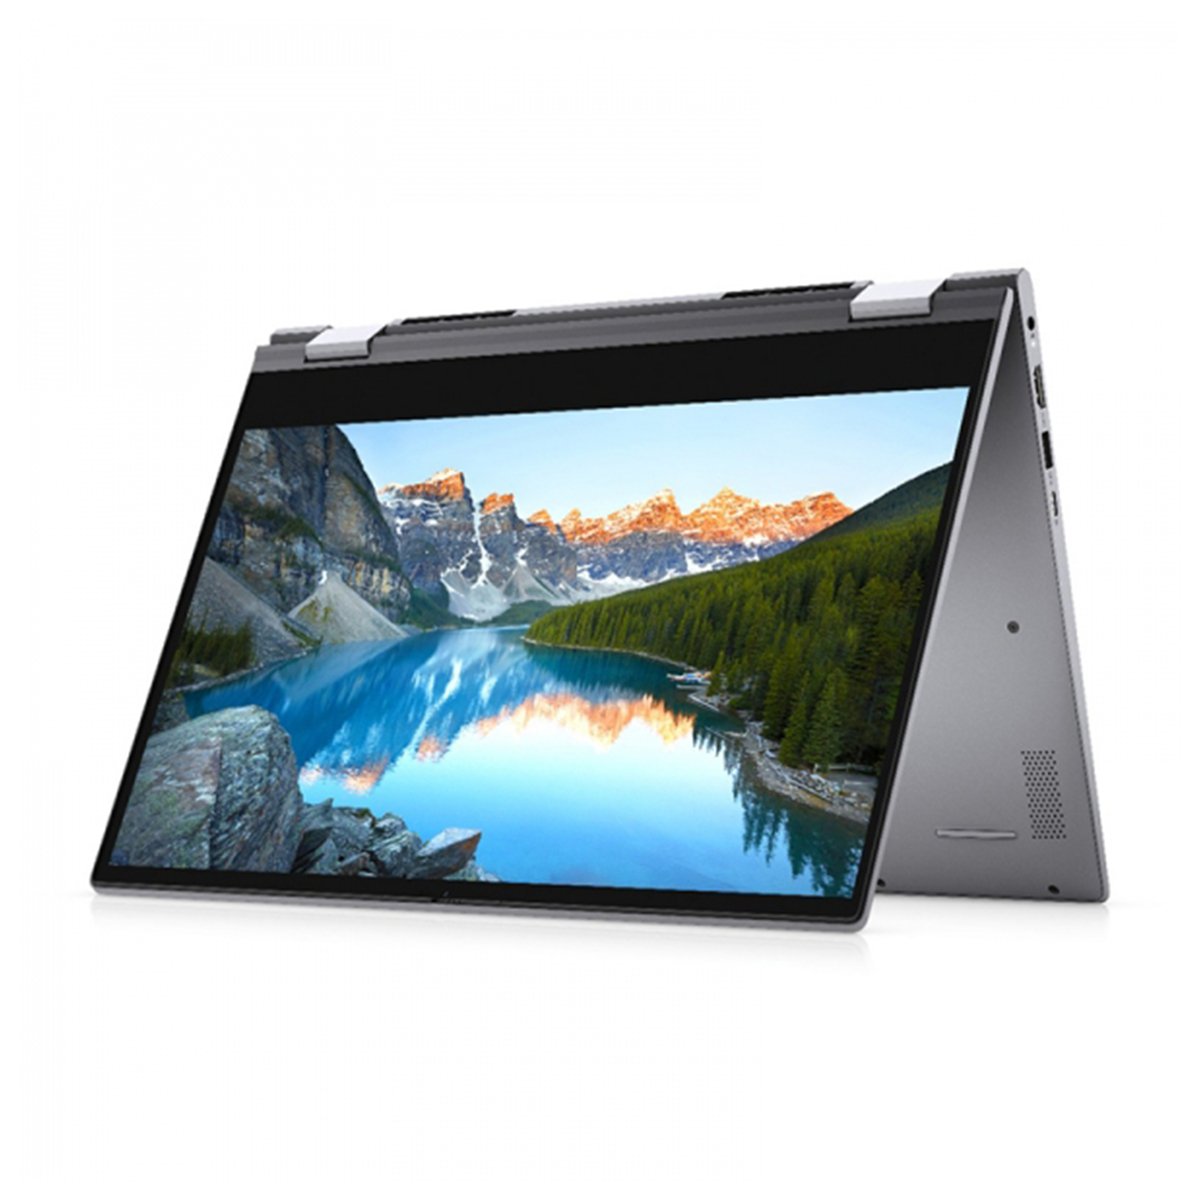 Dell 5406-INS-K0346 Convertible 2 in 1 Laptop, 11th Gen Intel Core i3, 14 inch, 4GB, 256GB, Titan Grey